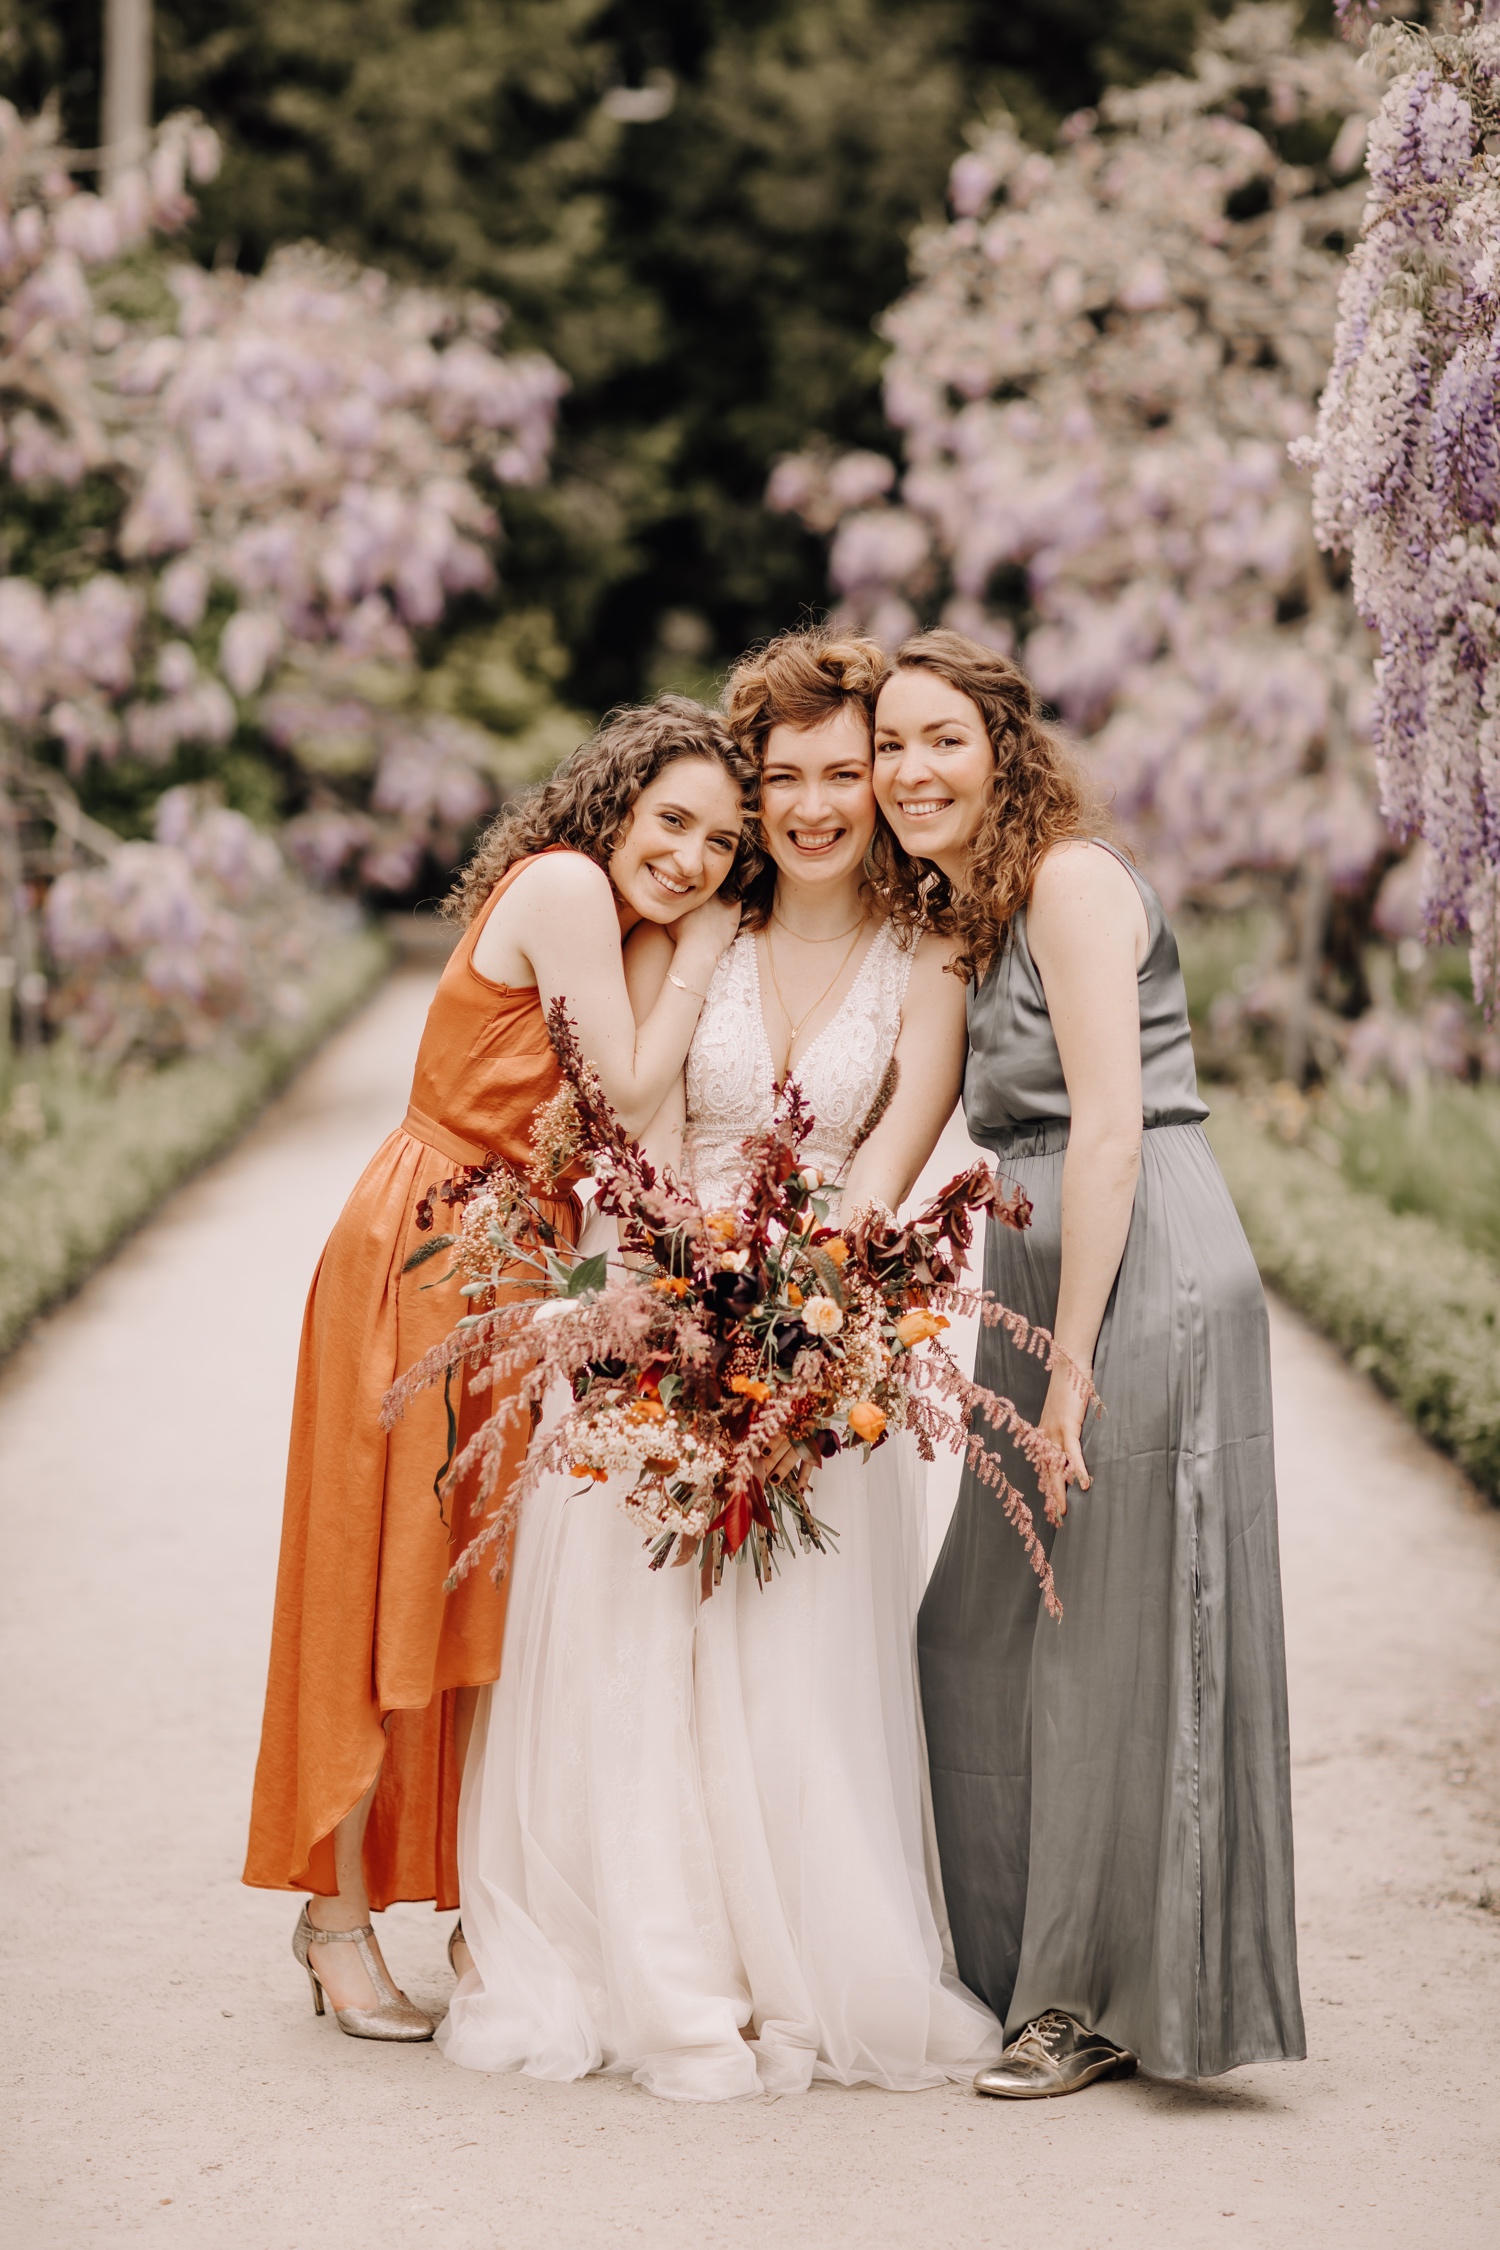 Huwelijksfotograaf limburg - kruidtuin leuven